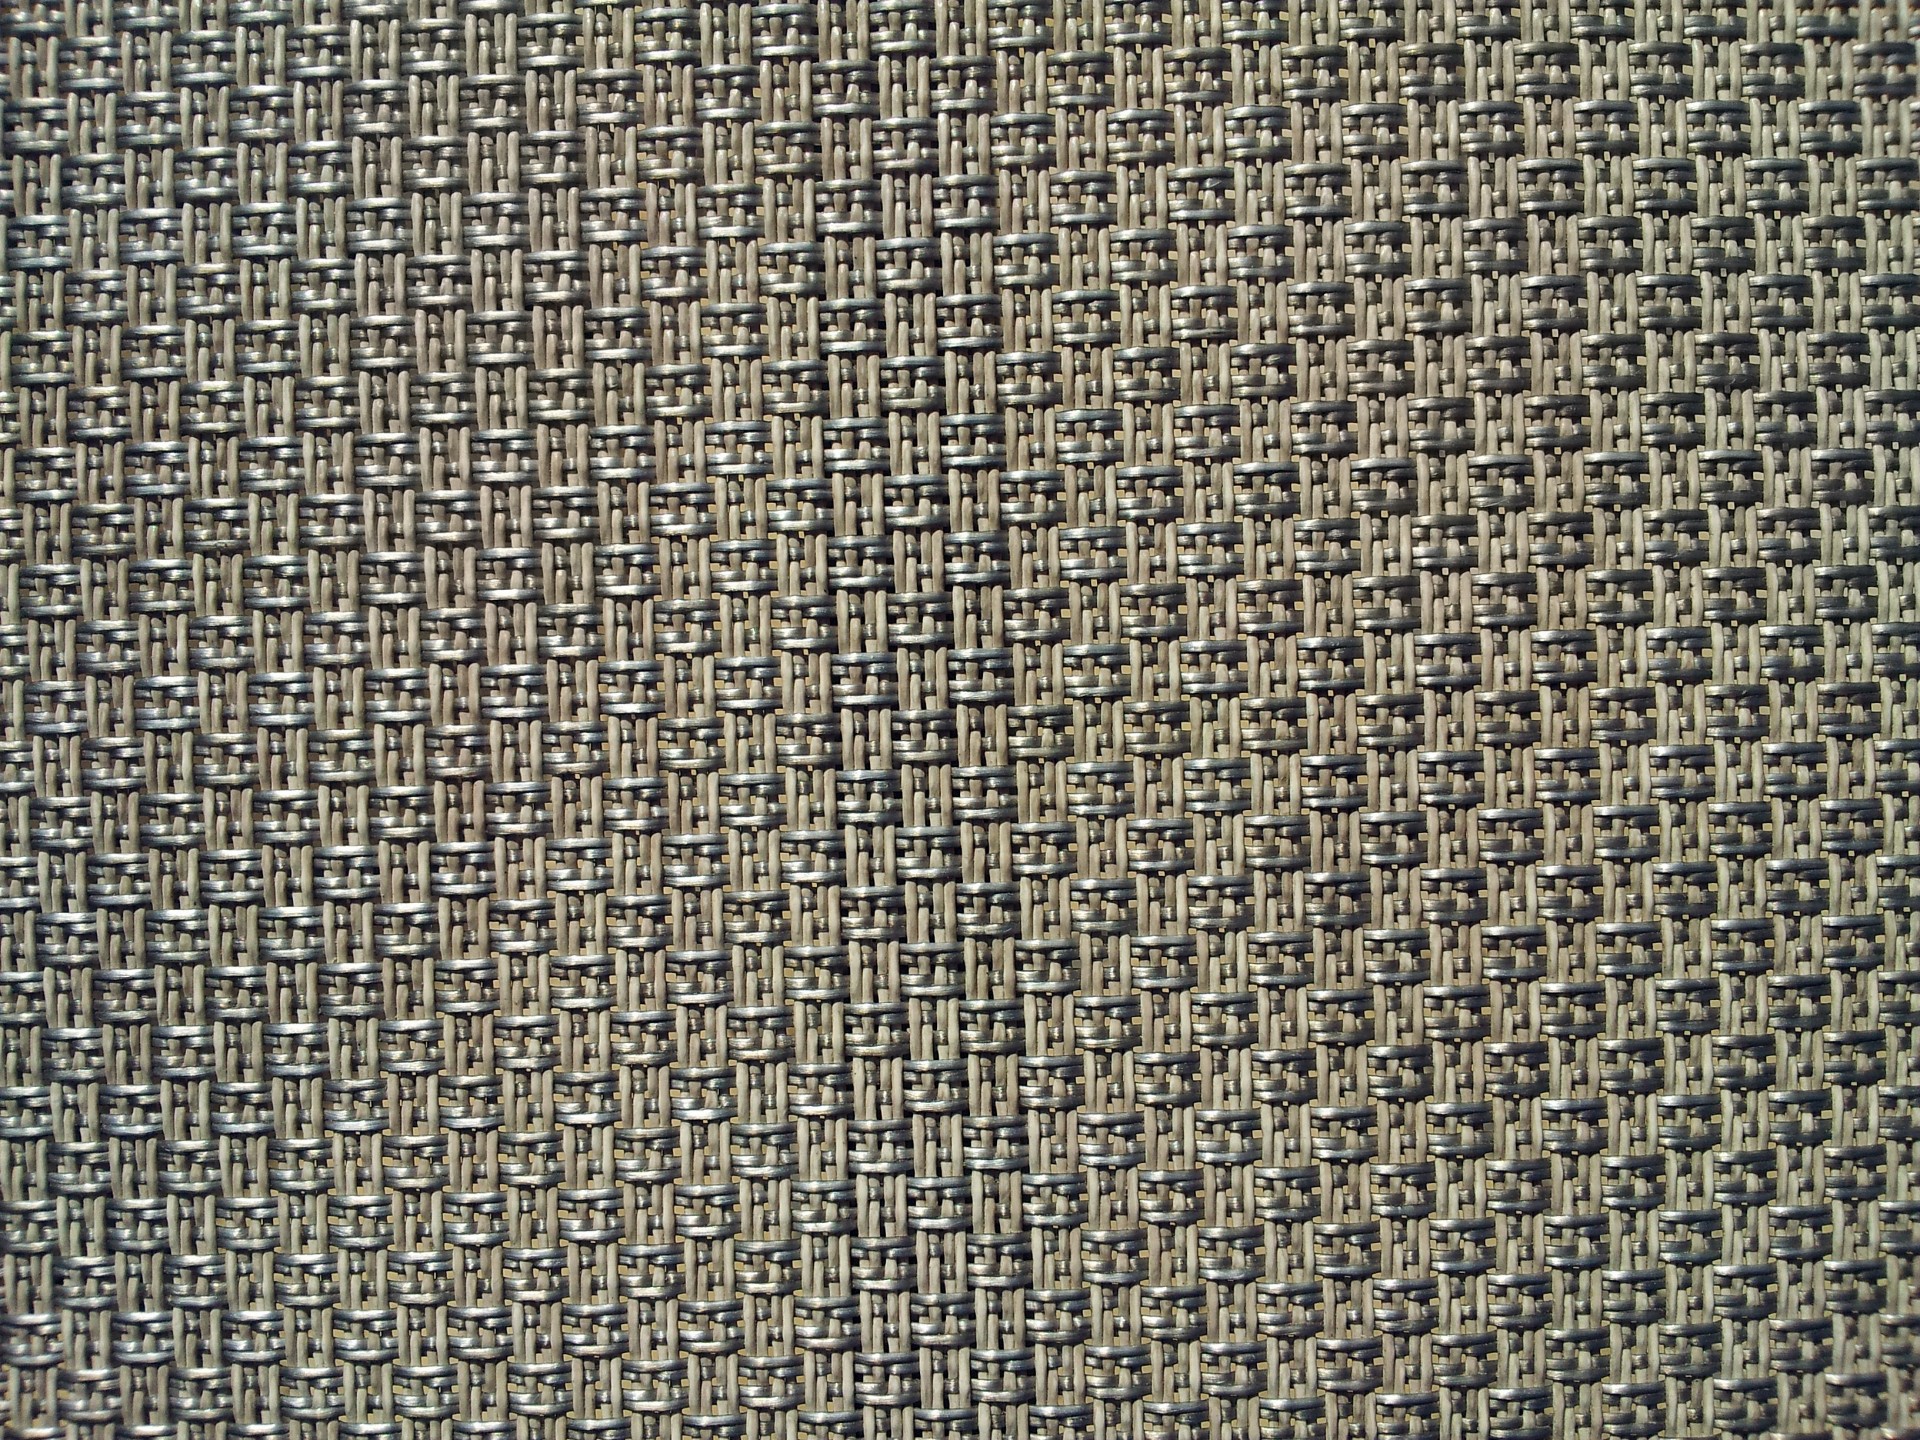 Squarish Stainless Steel Texture